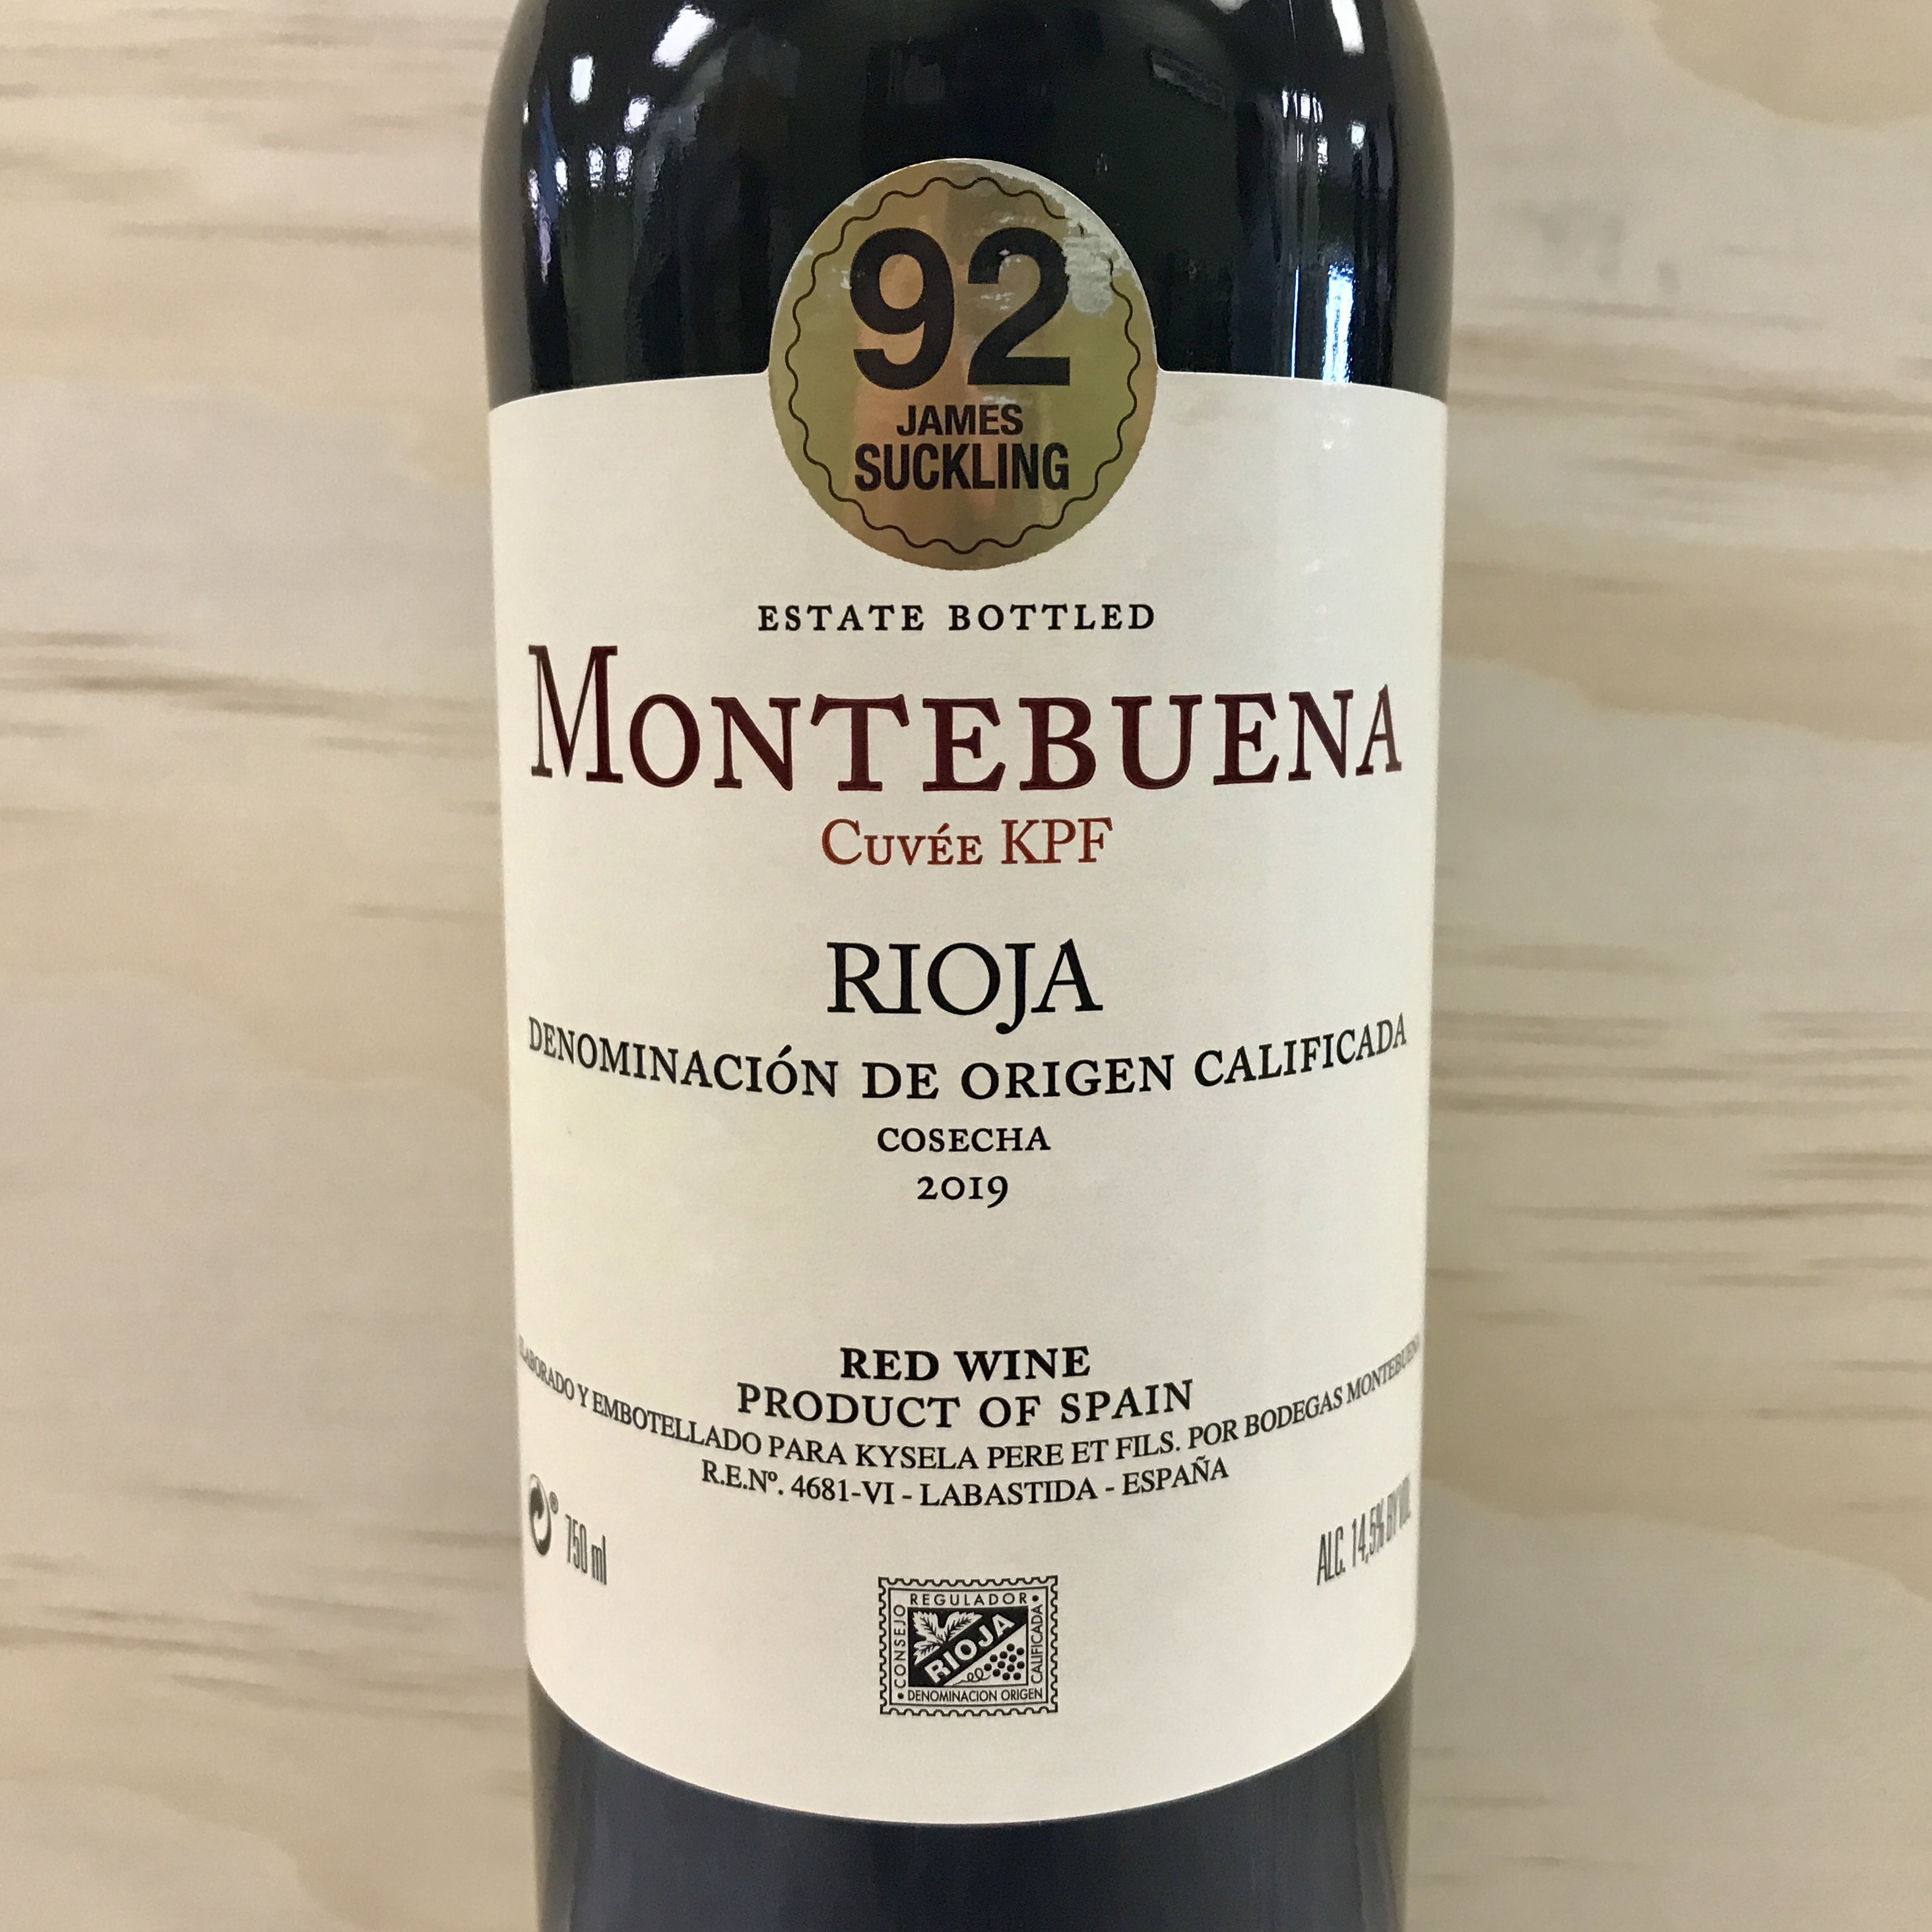 Montebuena Cuvee KPF Rioja 2019